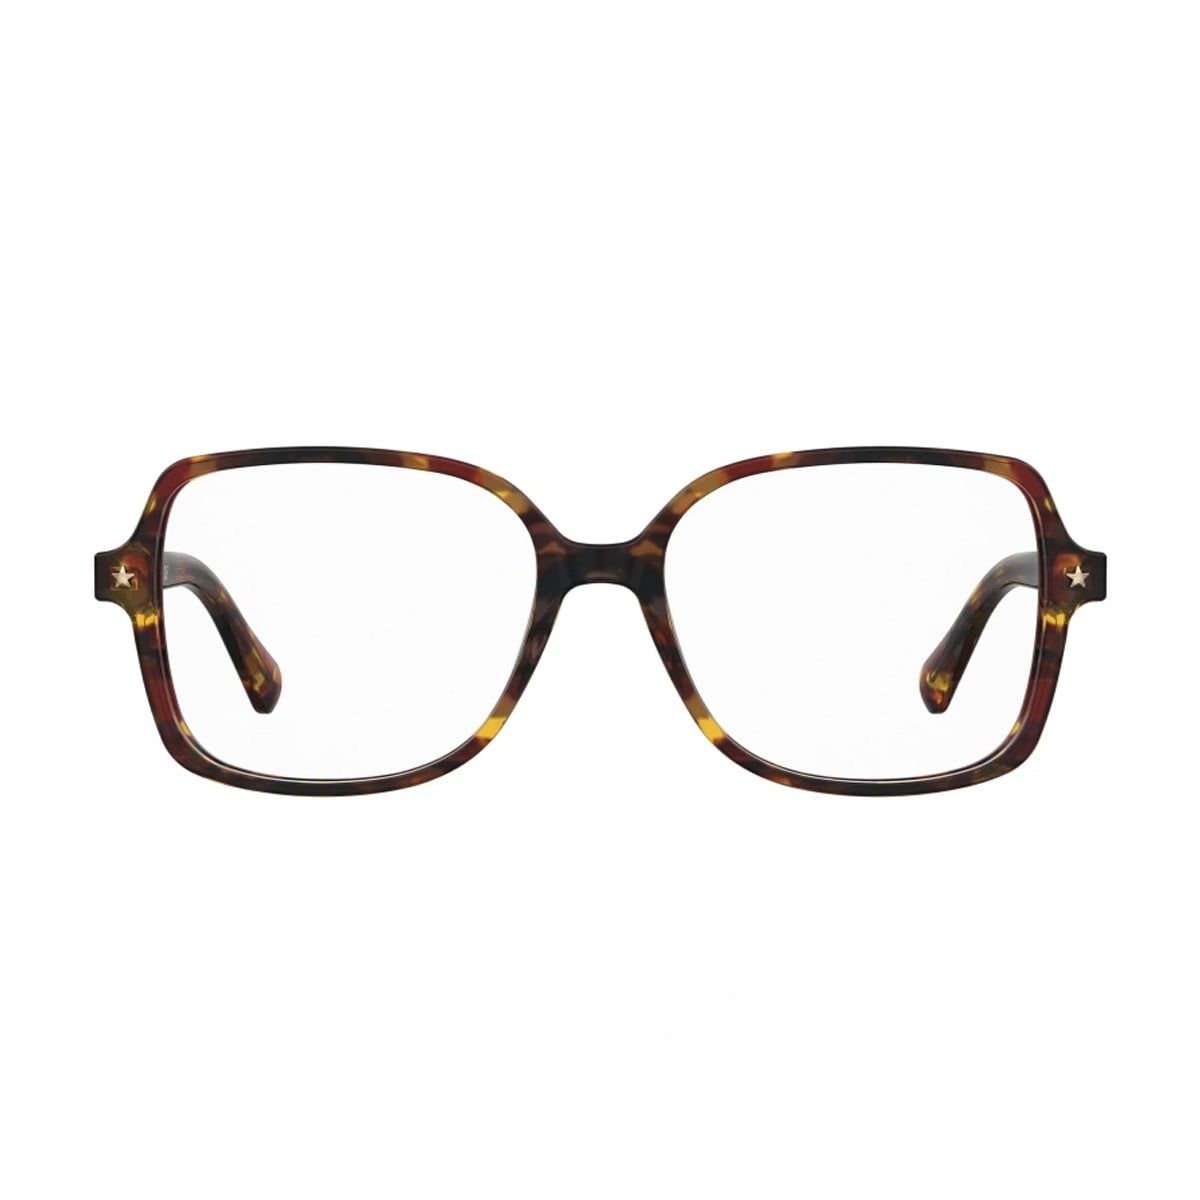 Cf 1026 086/16 Havana Glasses